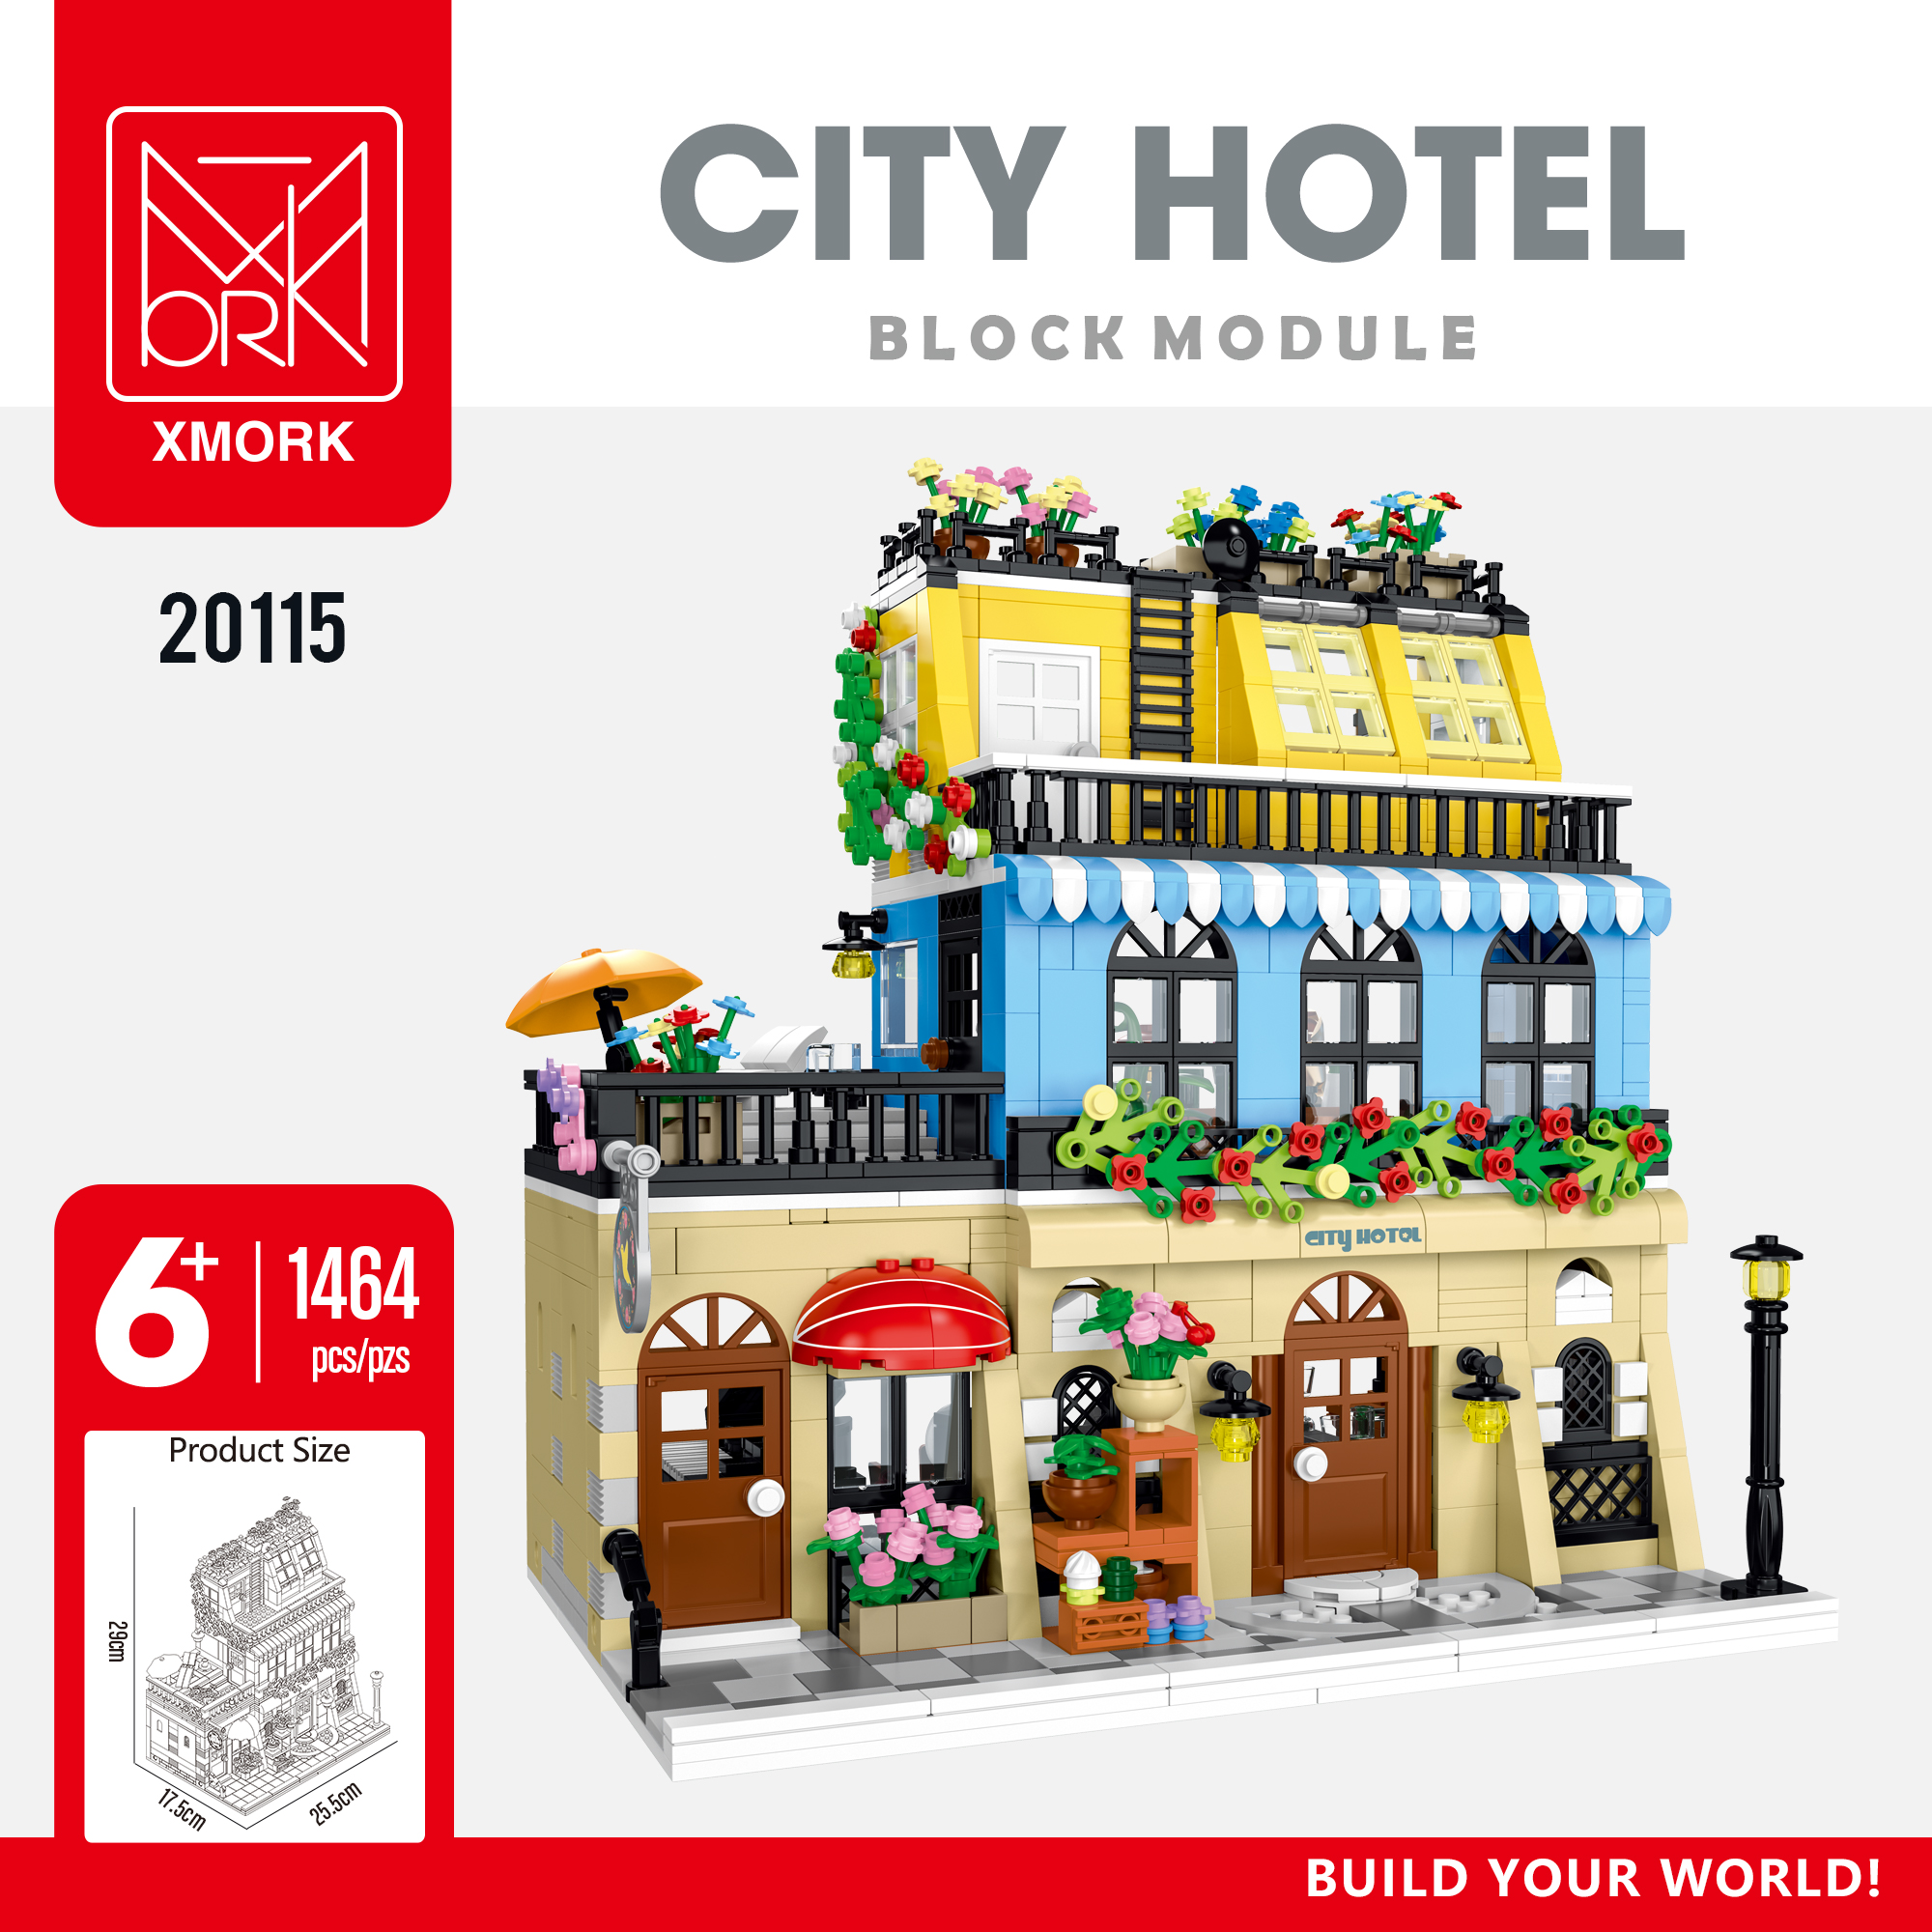 Mork 20115 City Hotel Block Module